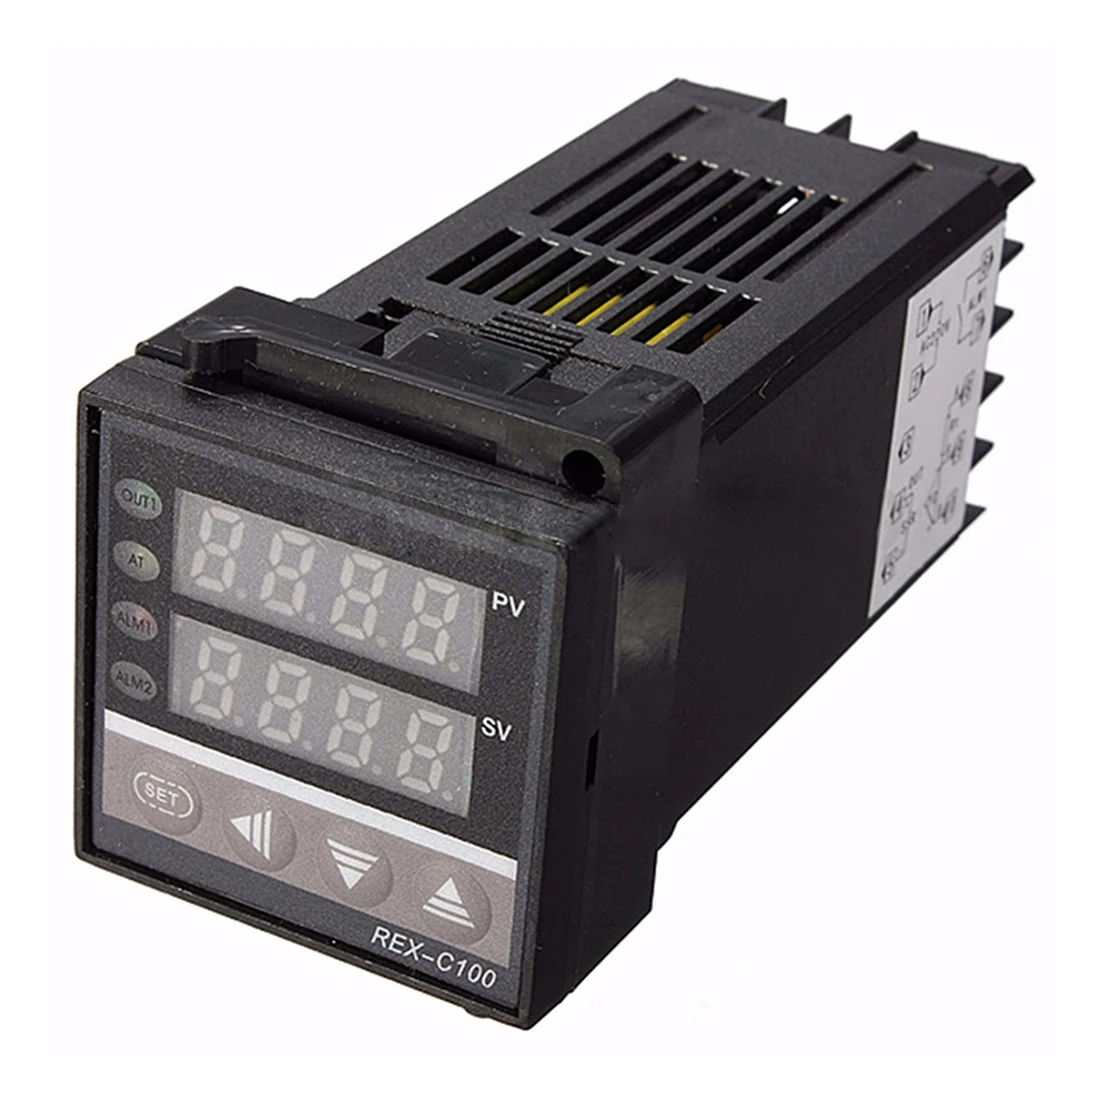 Цифровой 220 в PID REX-C100 регулятор температуры+ max.40A SSR+ K термопара, PID контроллер комплект+ радиатор